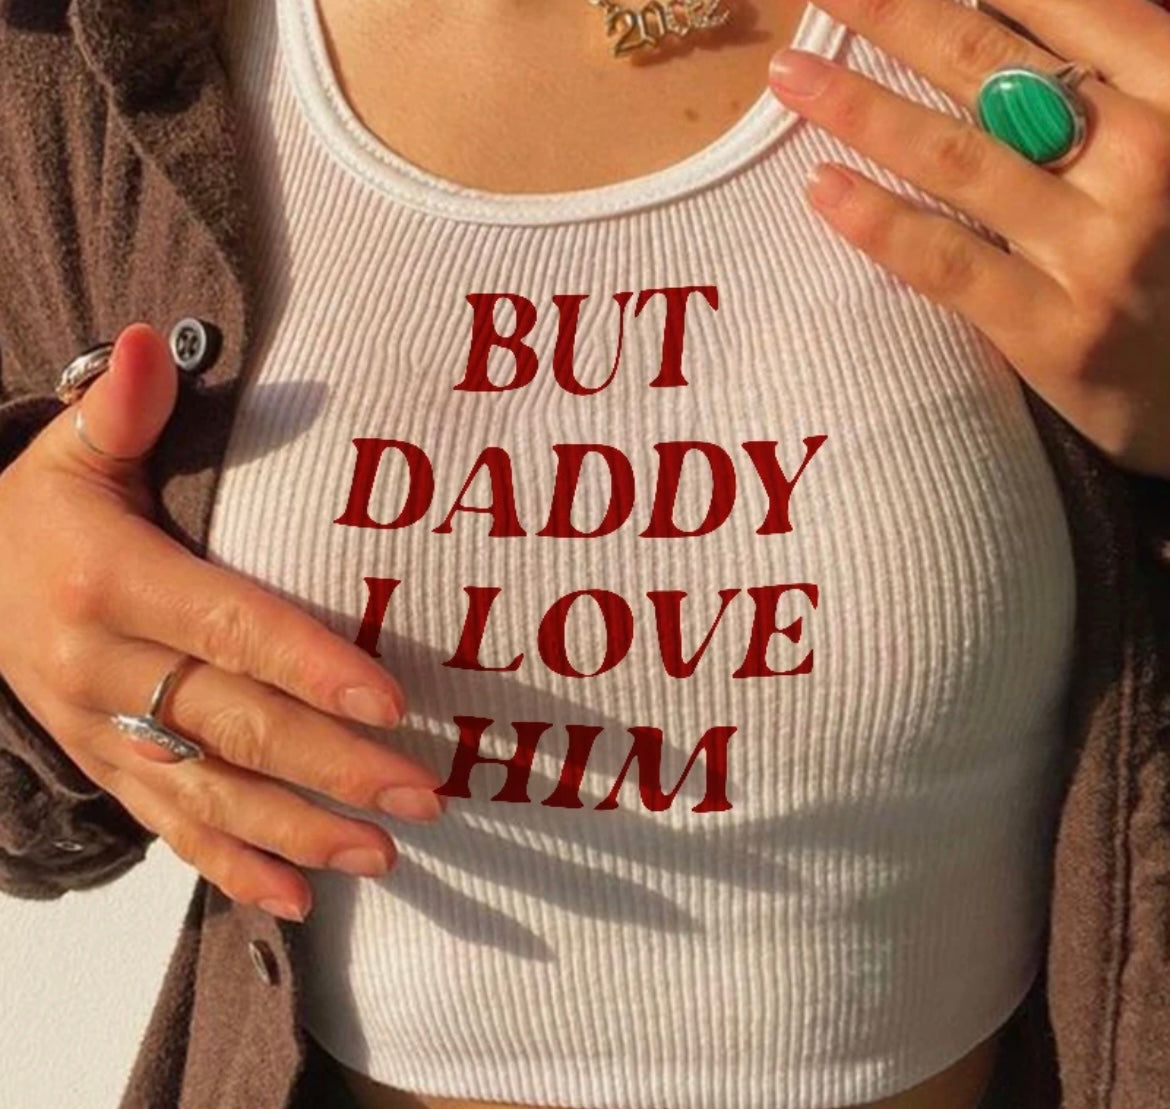 Taylor Swift “But Daddy I Love Him” Crop